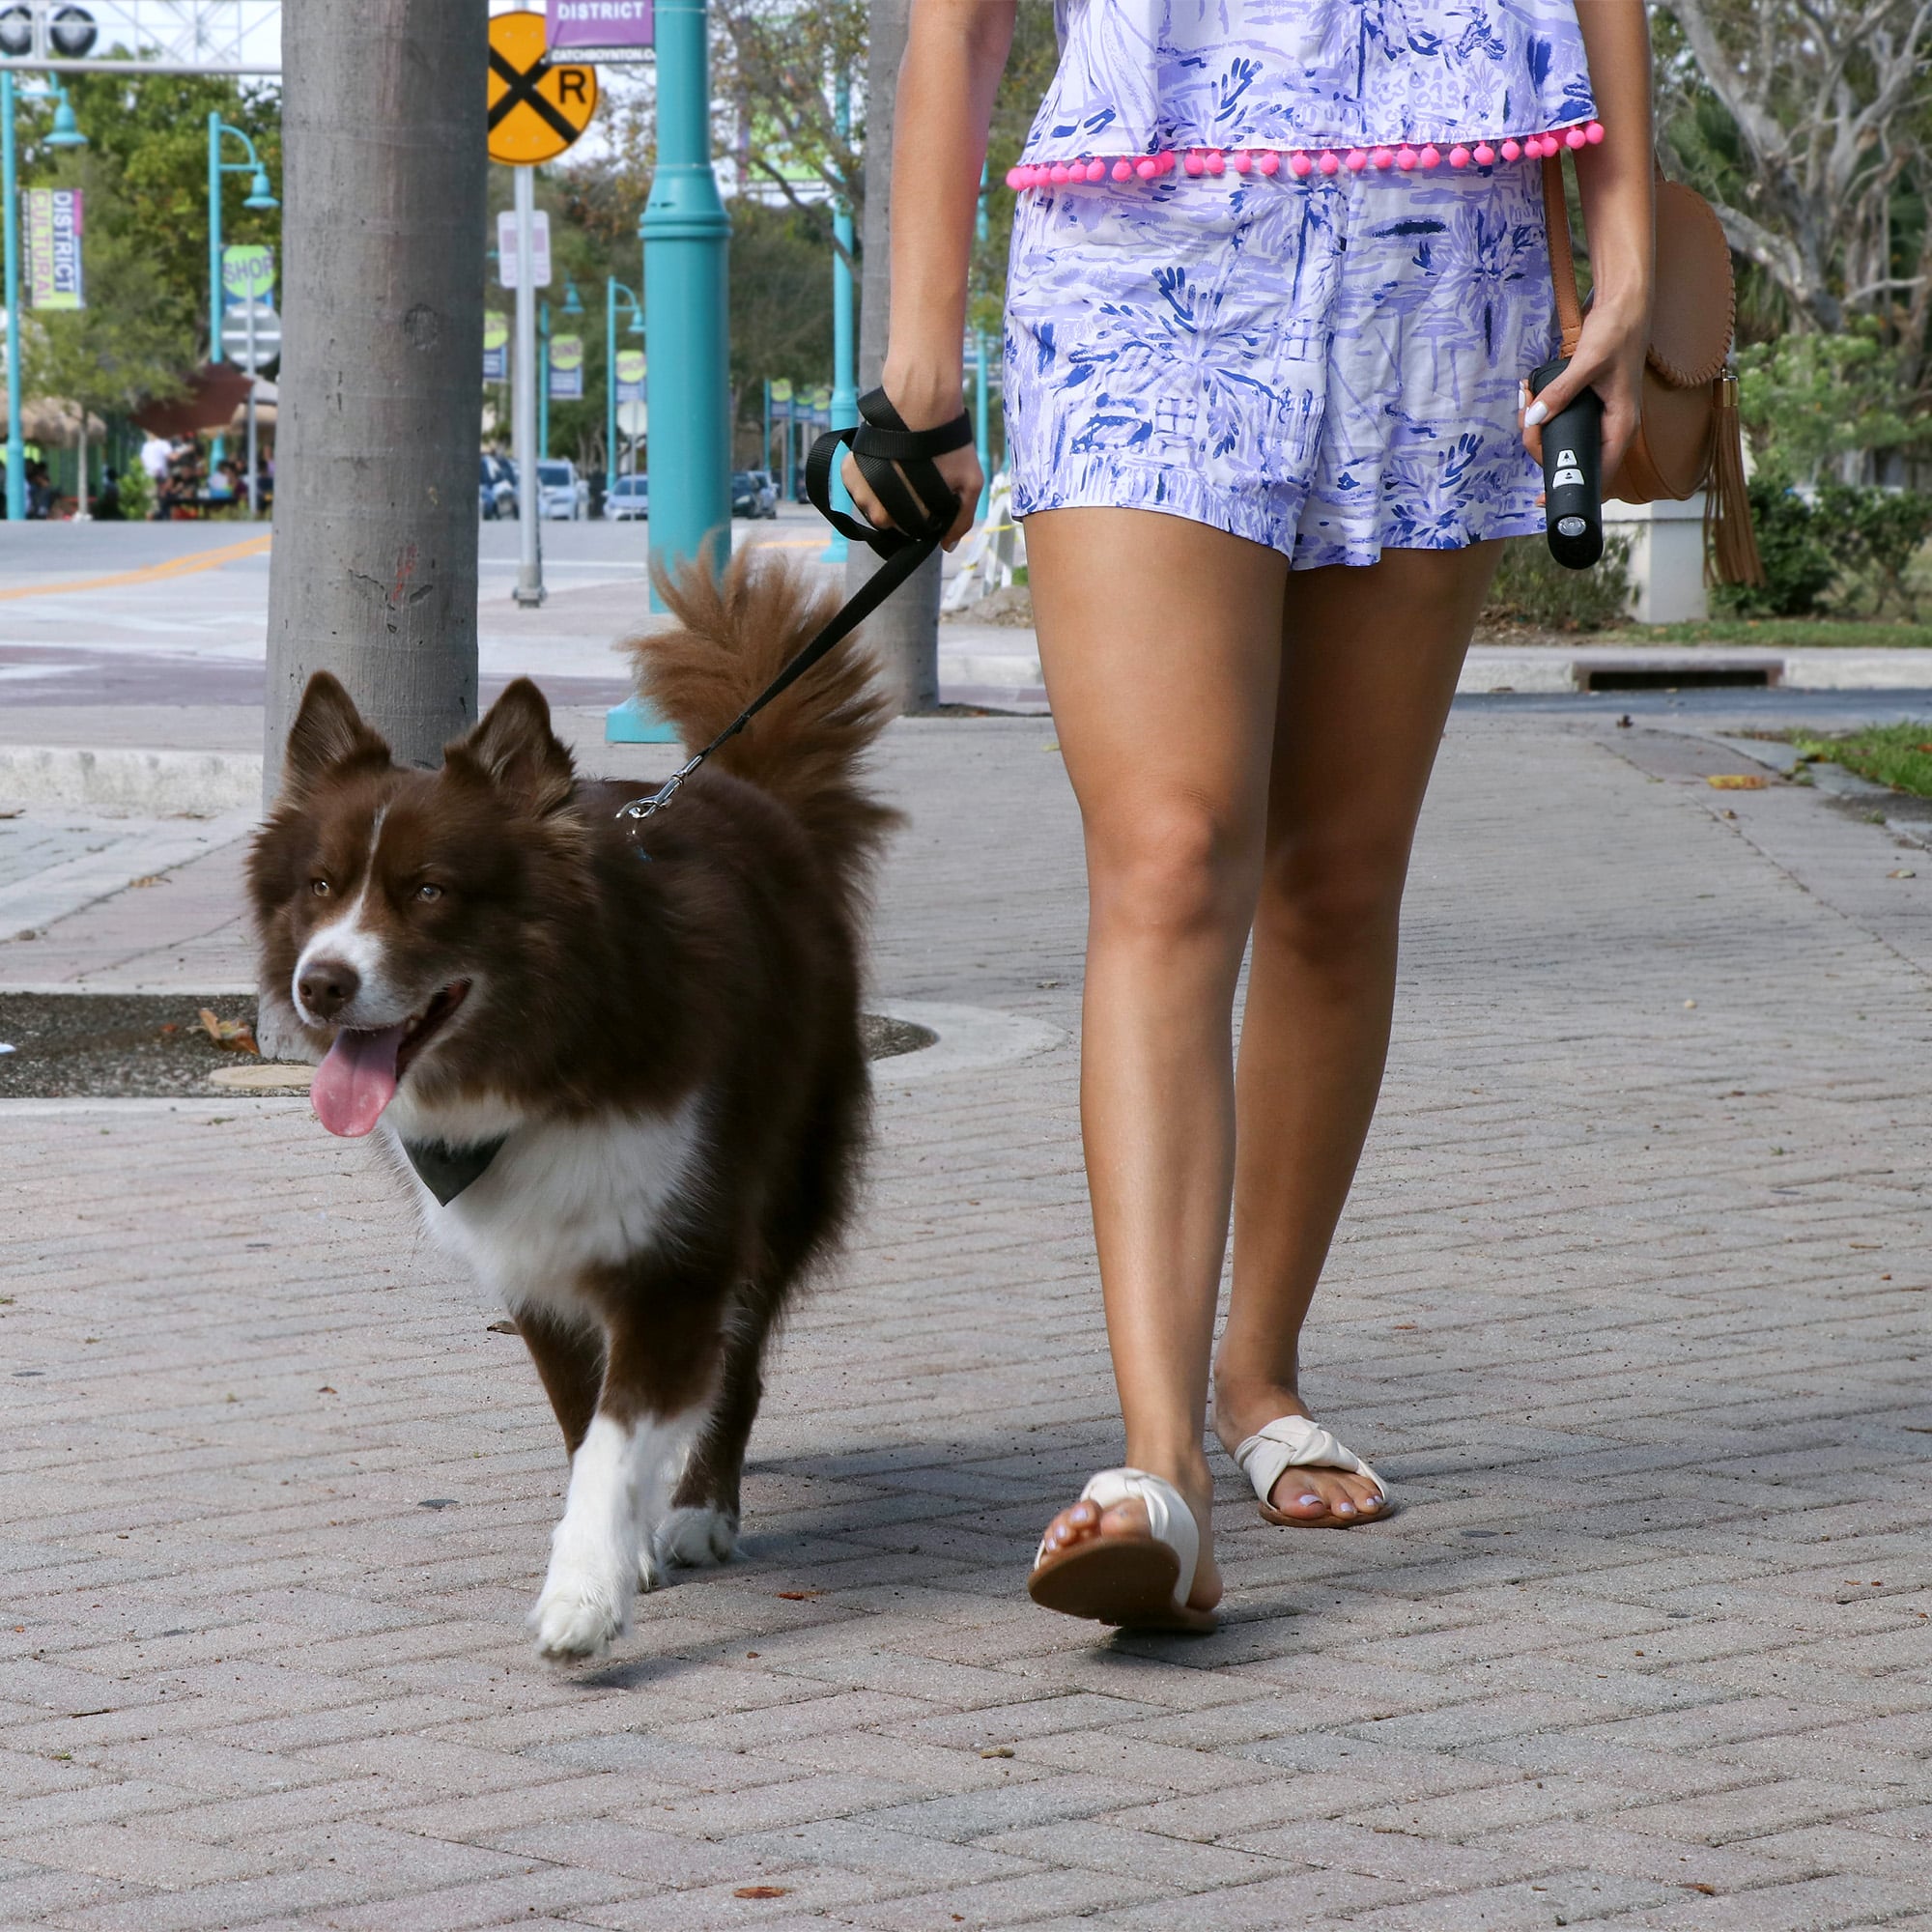 woman walking dog while holding Onguard dog trainer